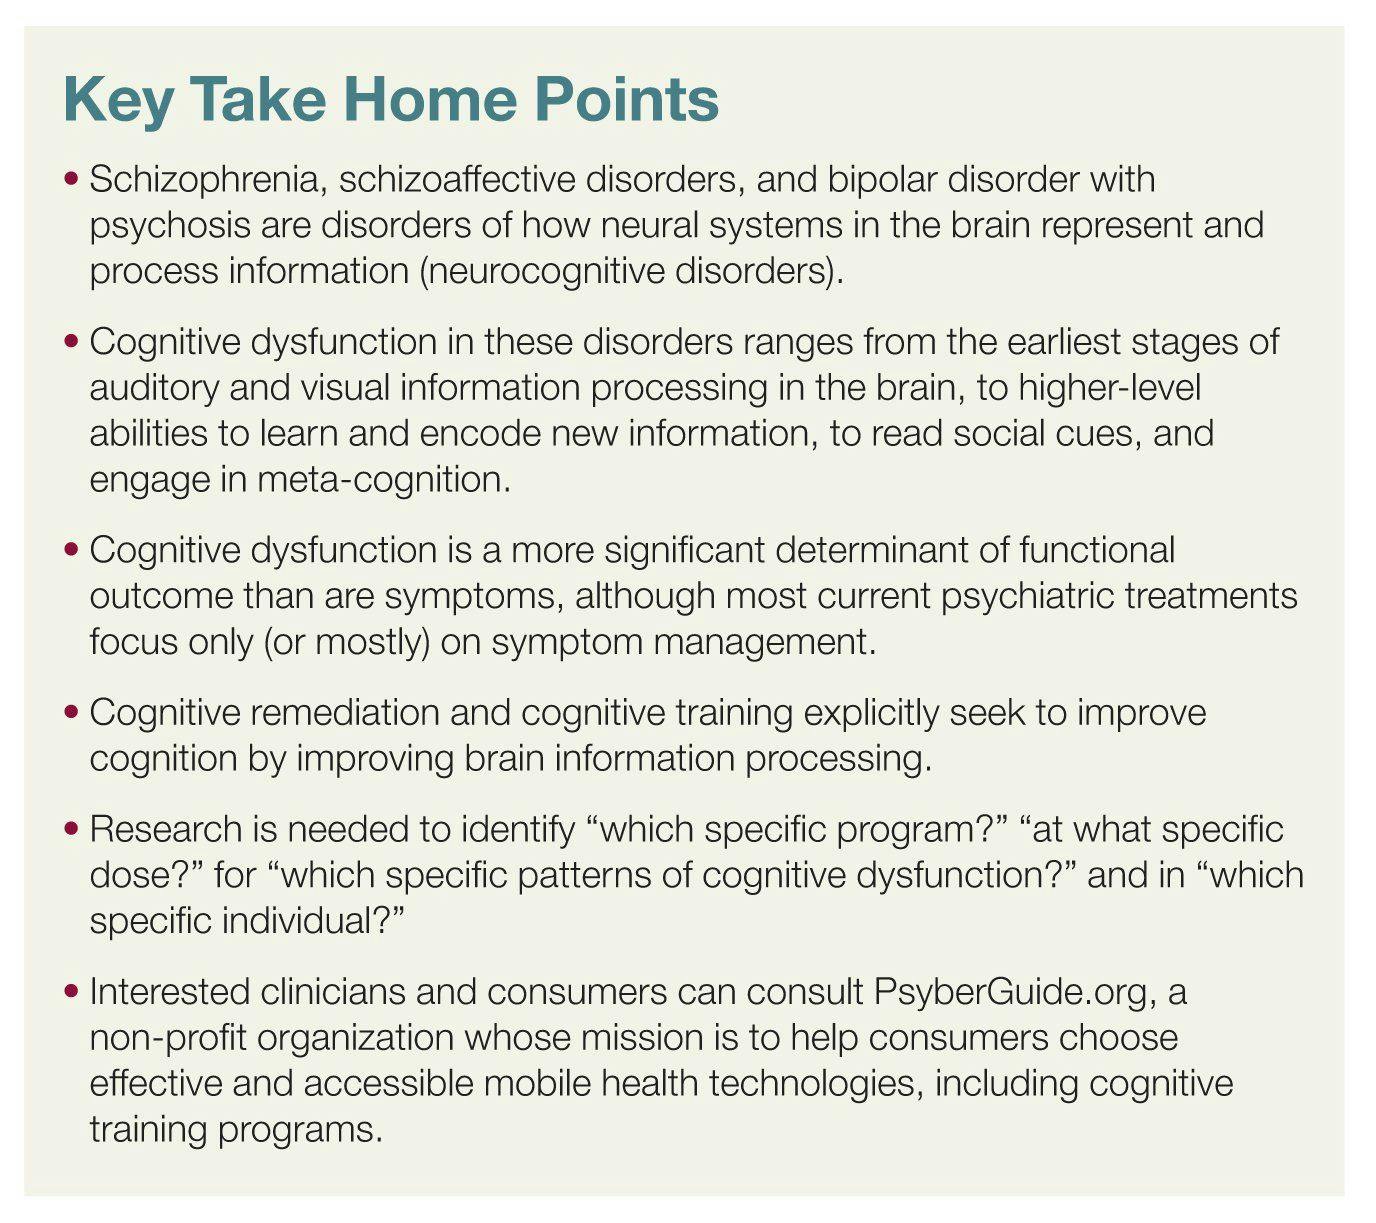 Key Take Home Points - Neurocognitive disorders